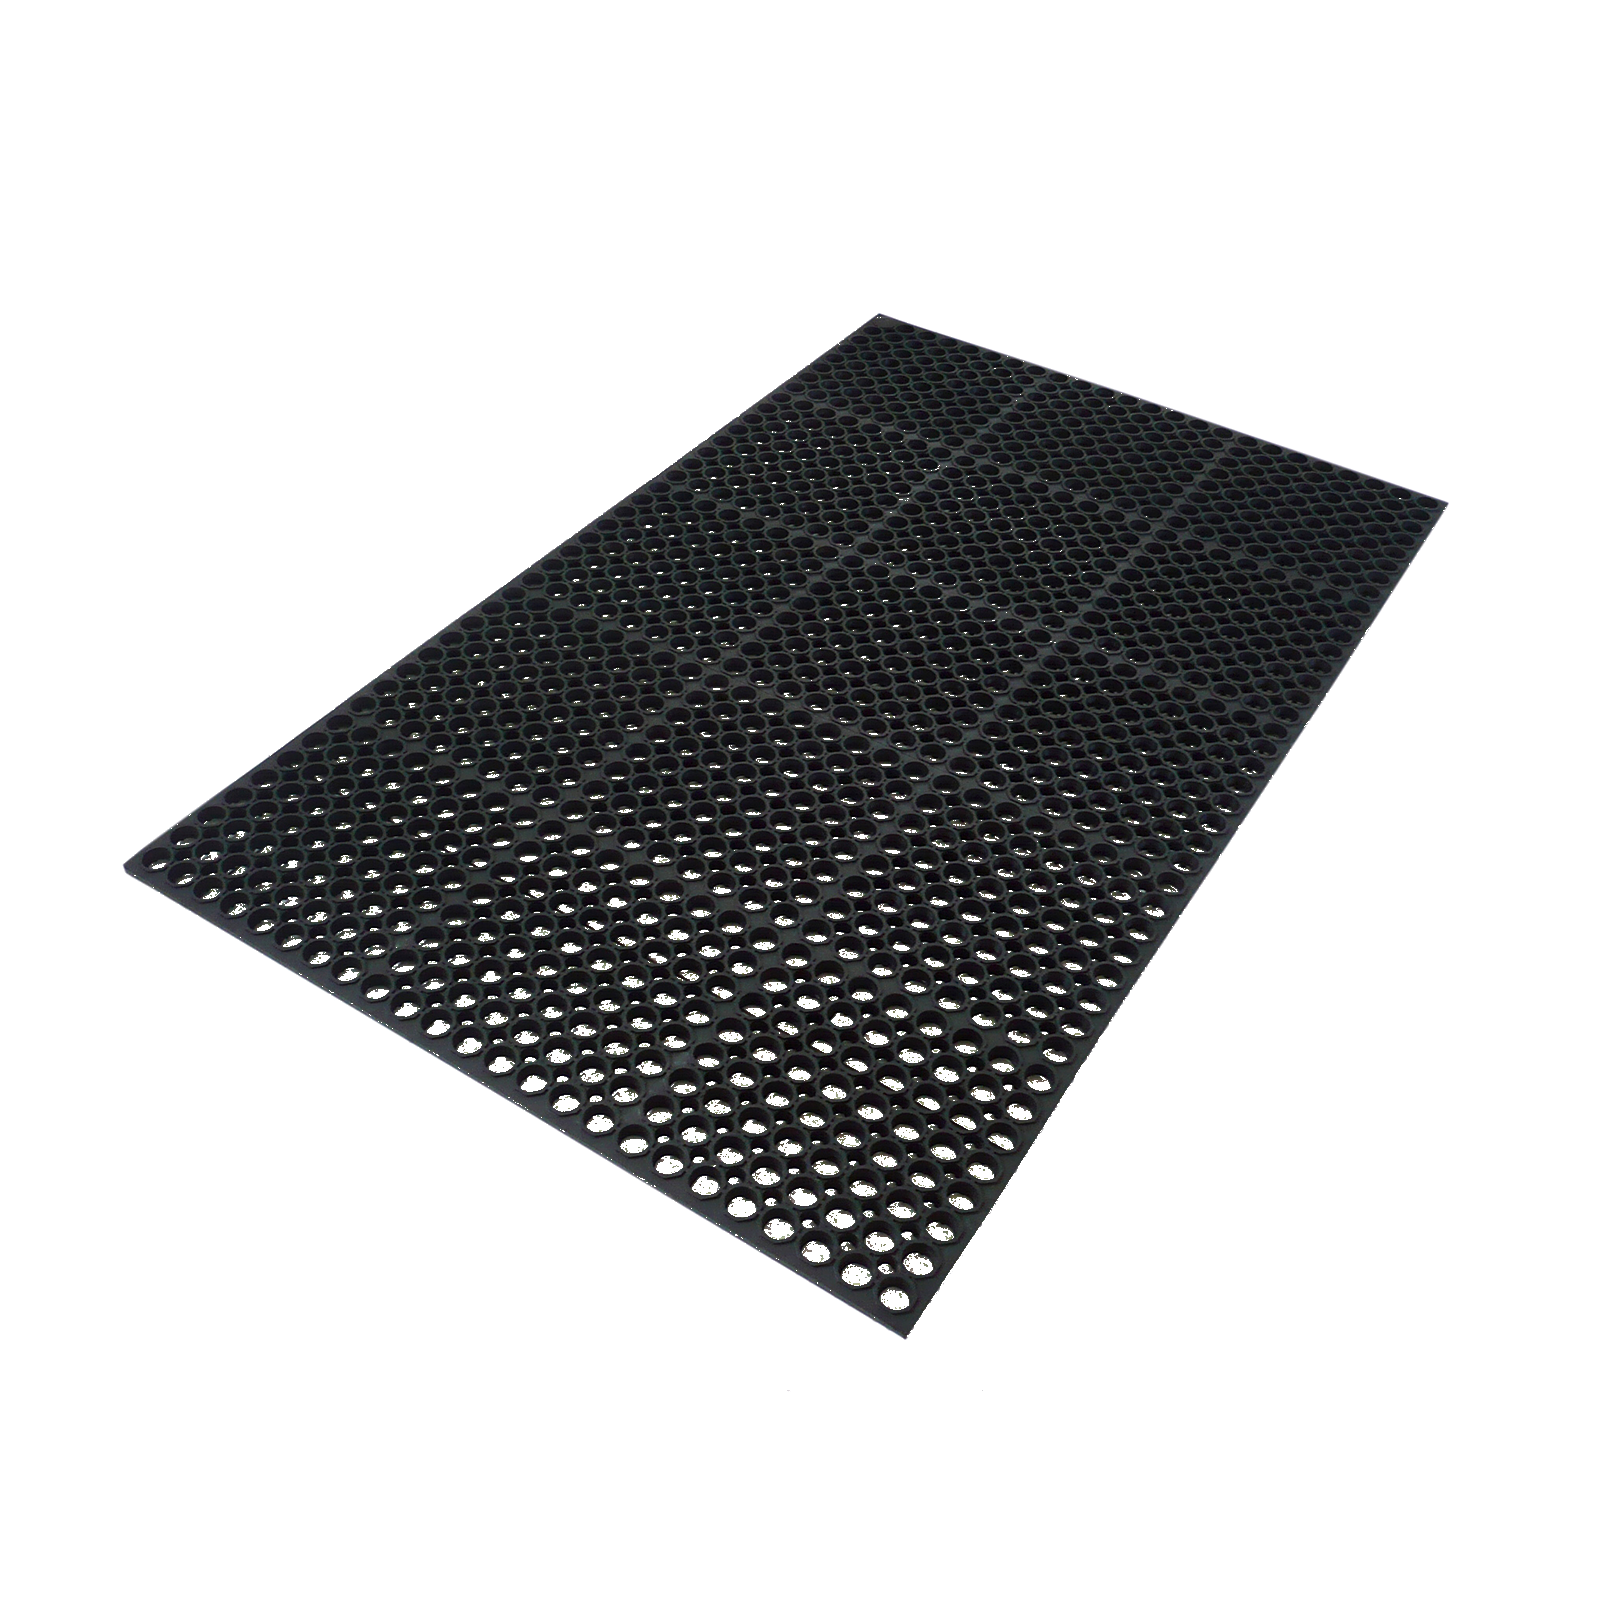 Axia Happy Mat AFD366034B Premium Anti-fatigue Floor Mat, 36" x 60", 3/4" thick, general purpose, rubber, black, NFSI certified